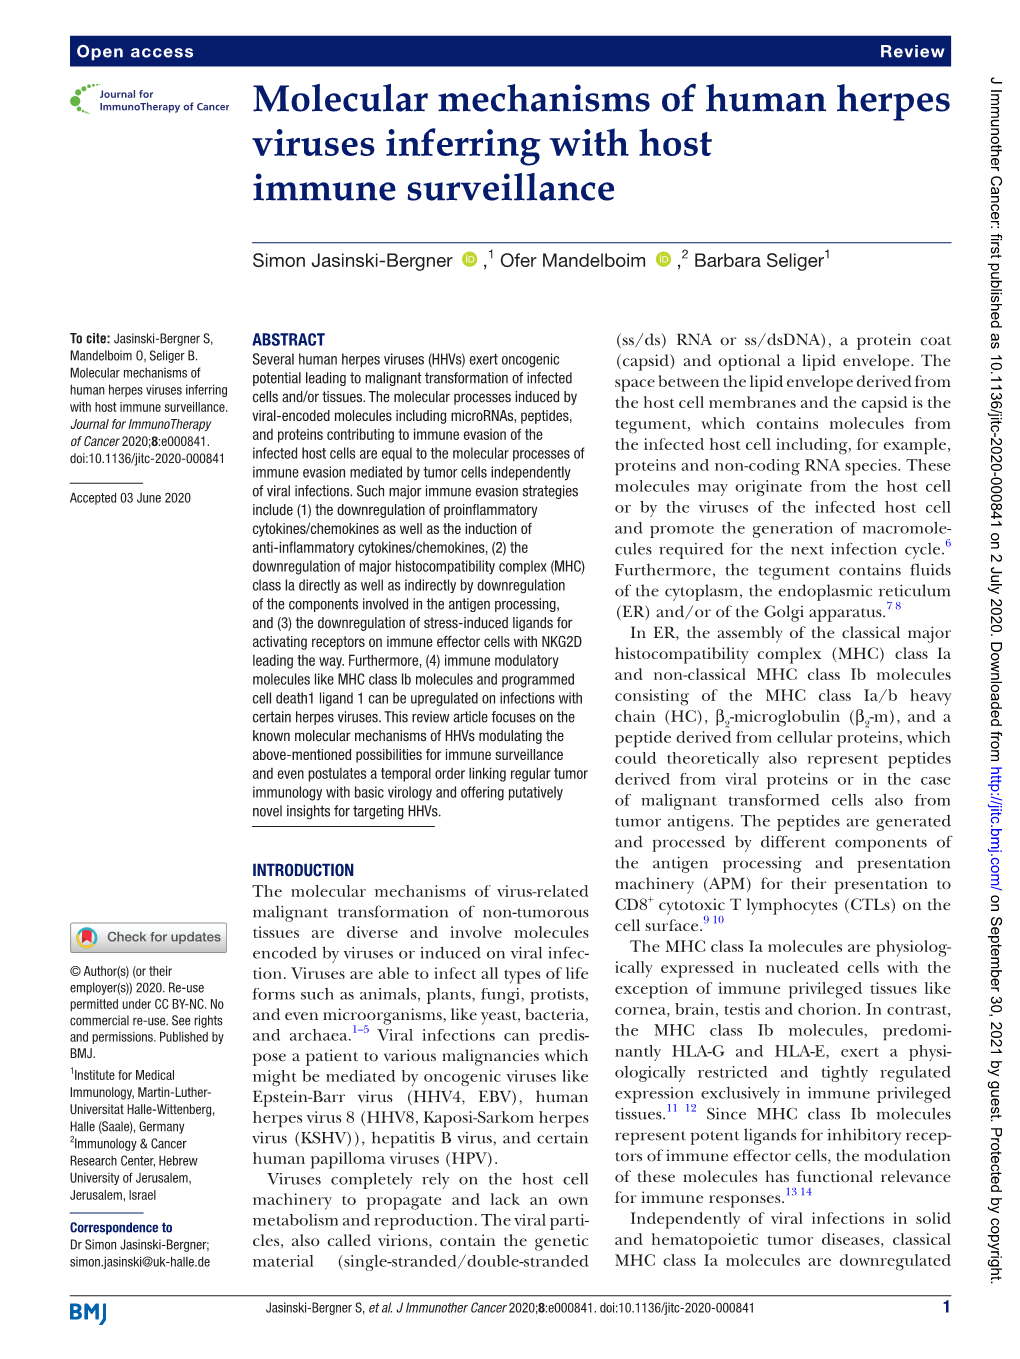 Molecular Mechanisms of Human Herpes Viruses Inferring with Host Immune Surveillance